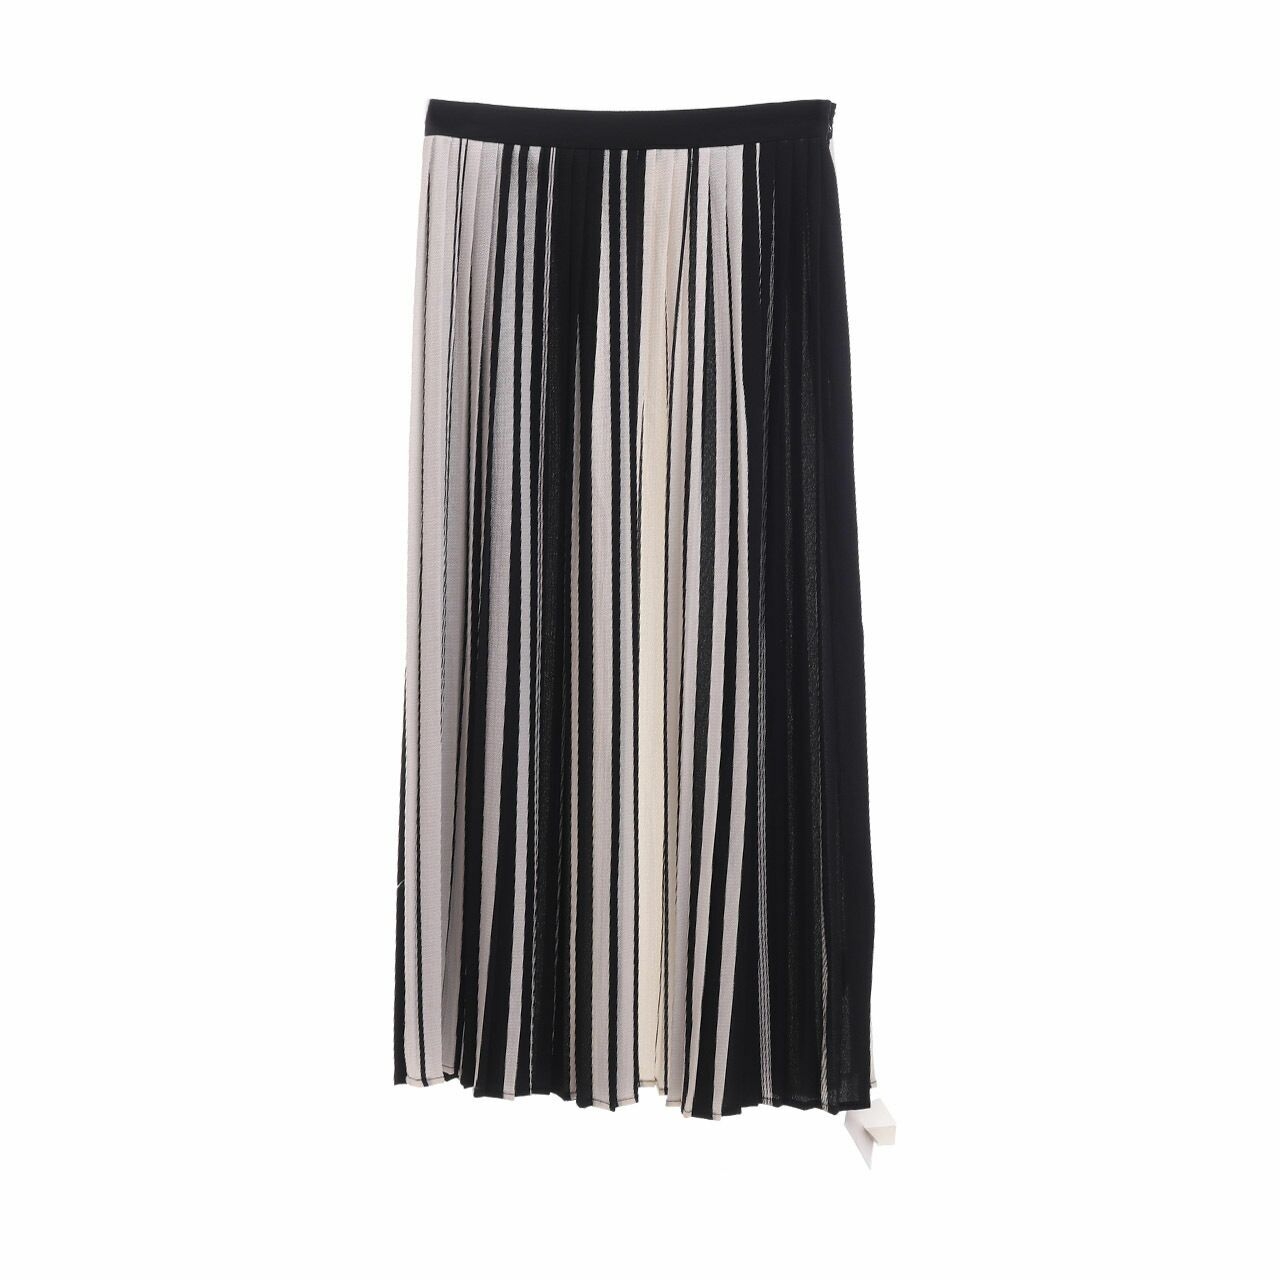 The Express Black & White Midi Skirt